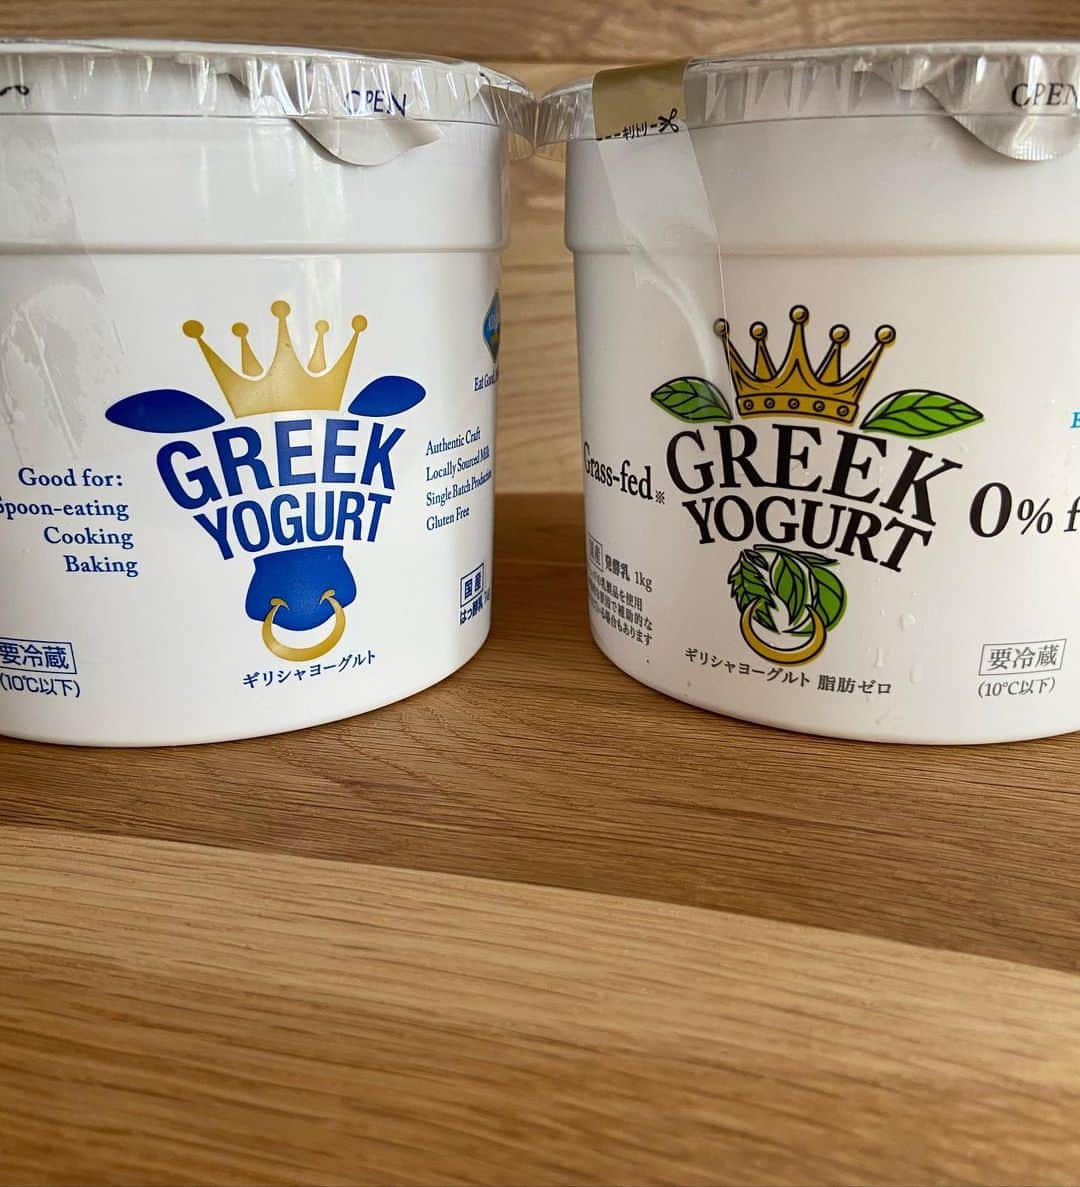 athena_greek_yogurtのインスタグラム